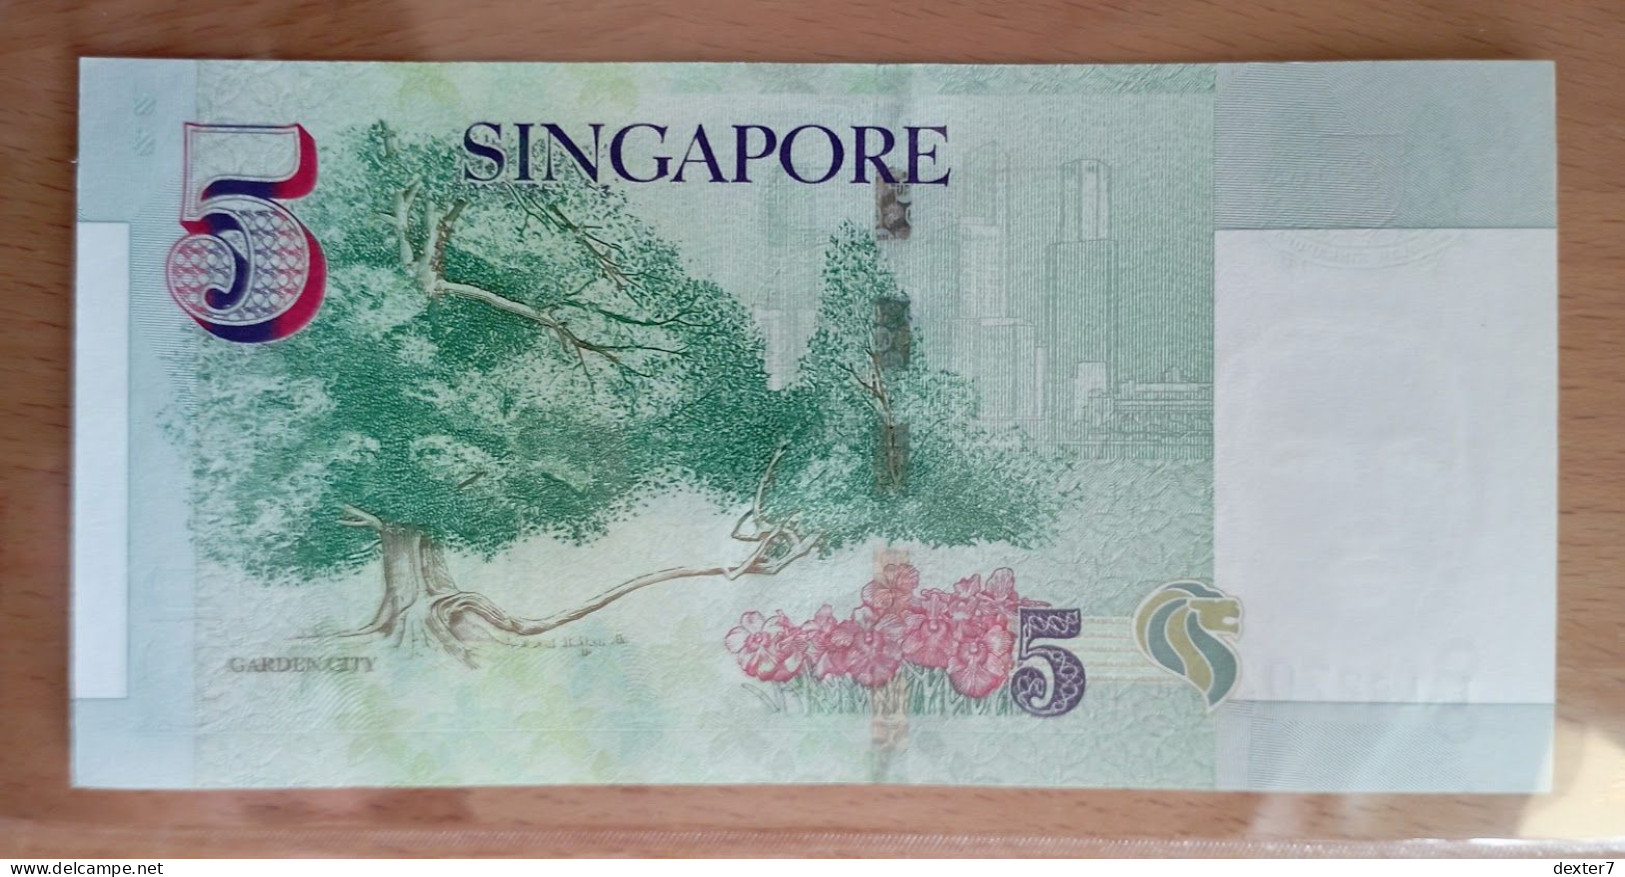 Singapore 5 Dollars 2005 UNC - Singapore